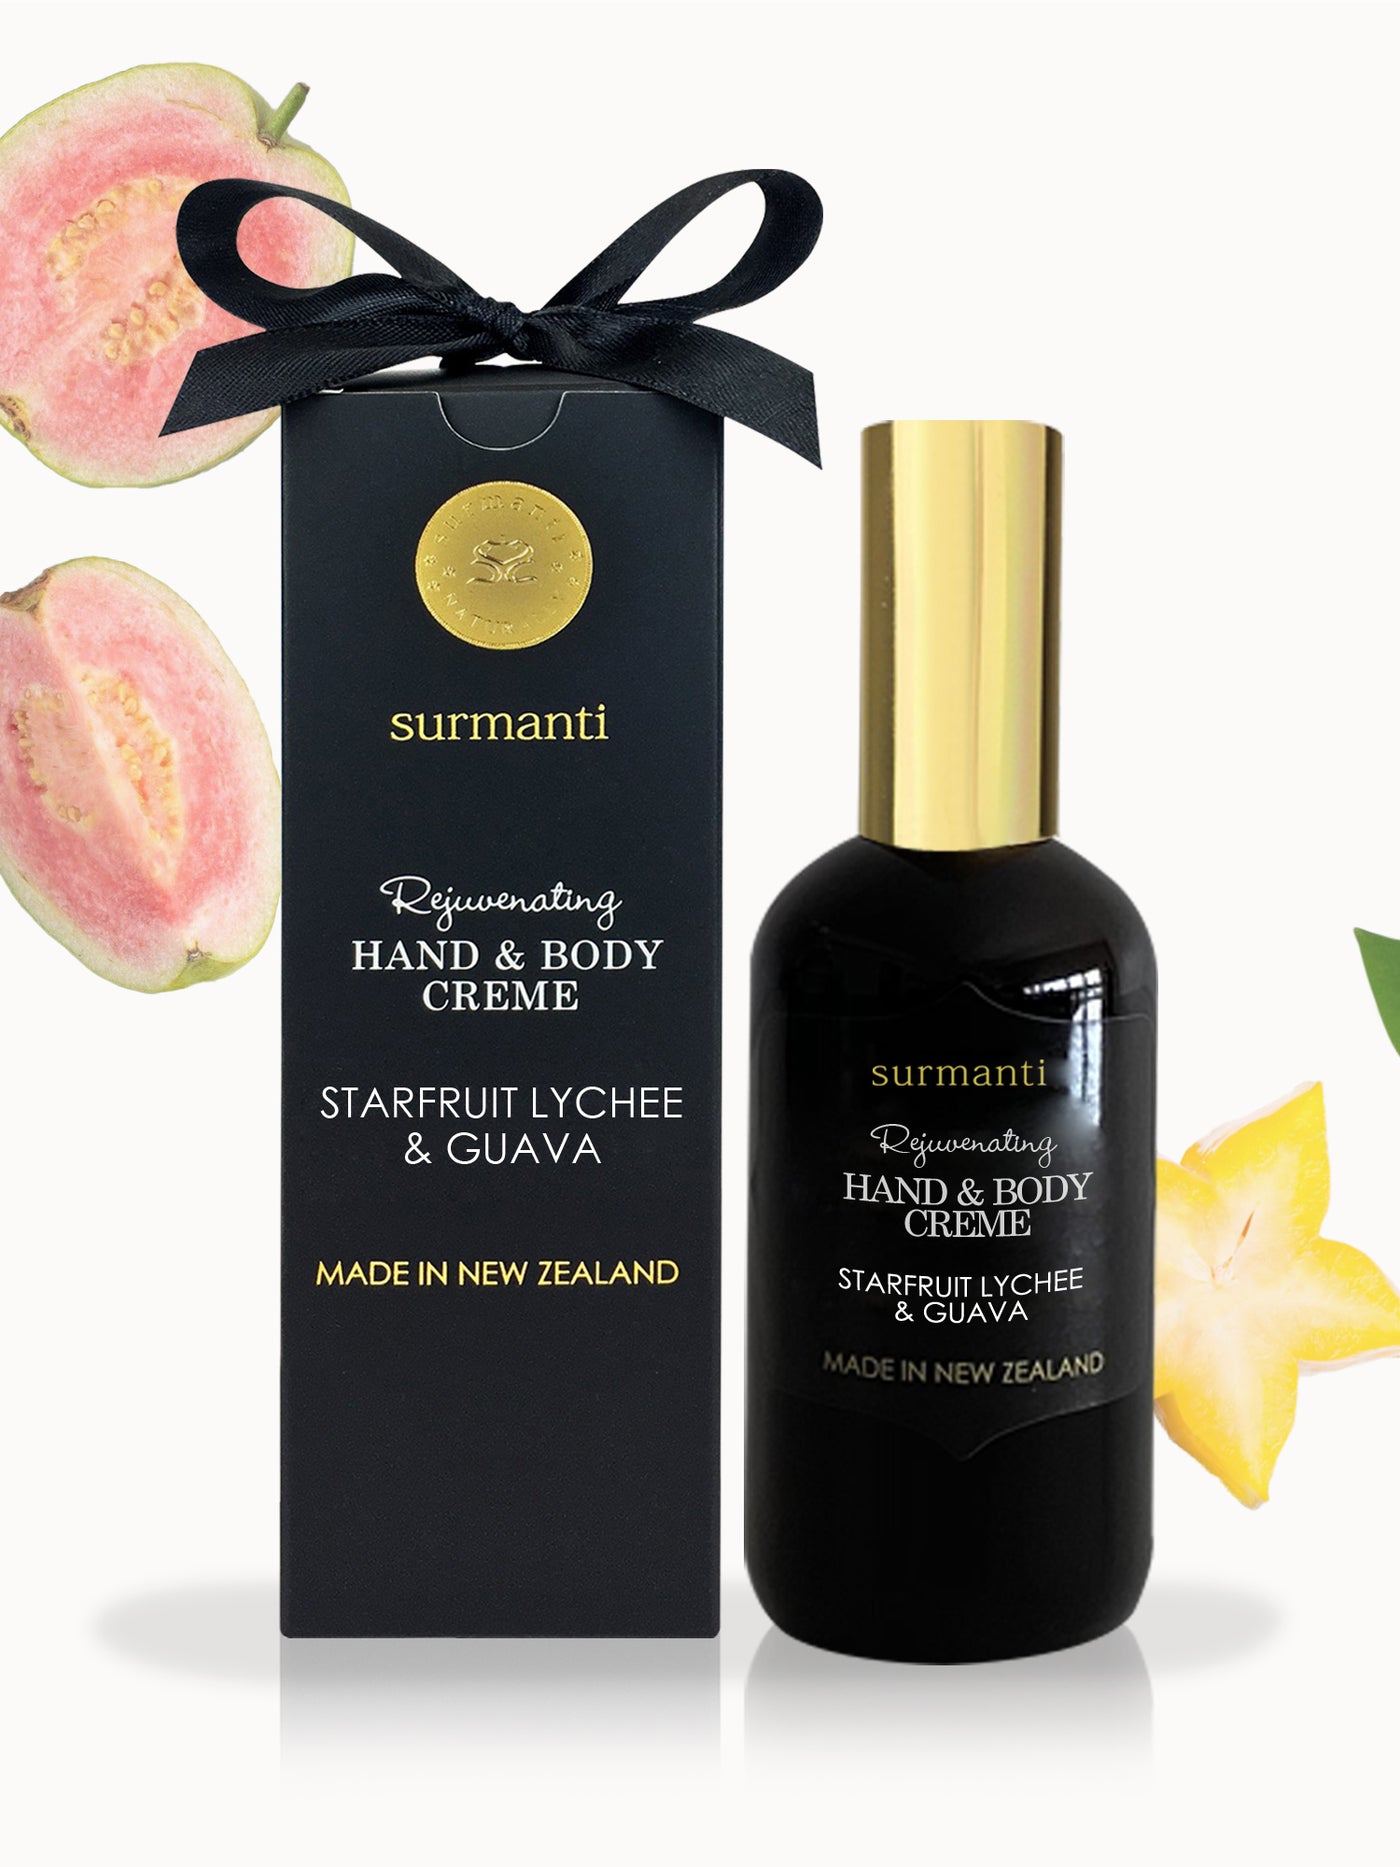 Starfruit Lychee & Guava Hand & Body Creme - Surmanti - Surmanti - Made In New Zealand